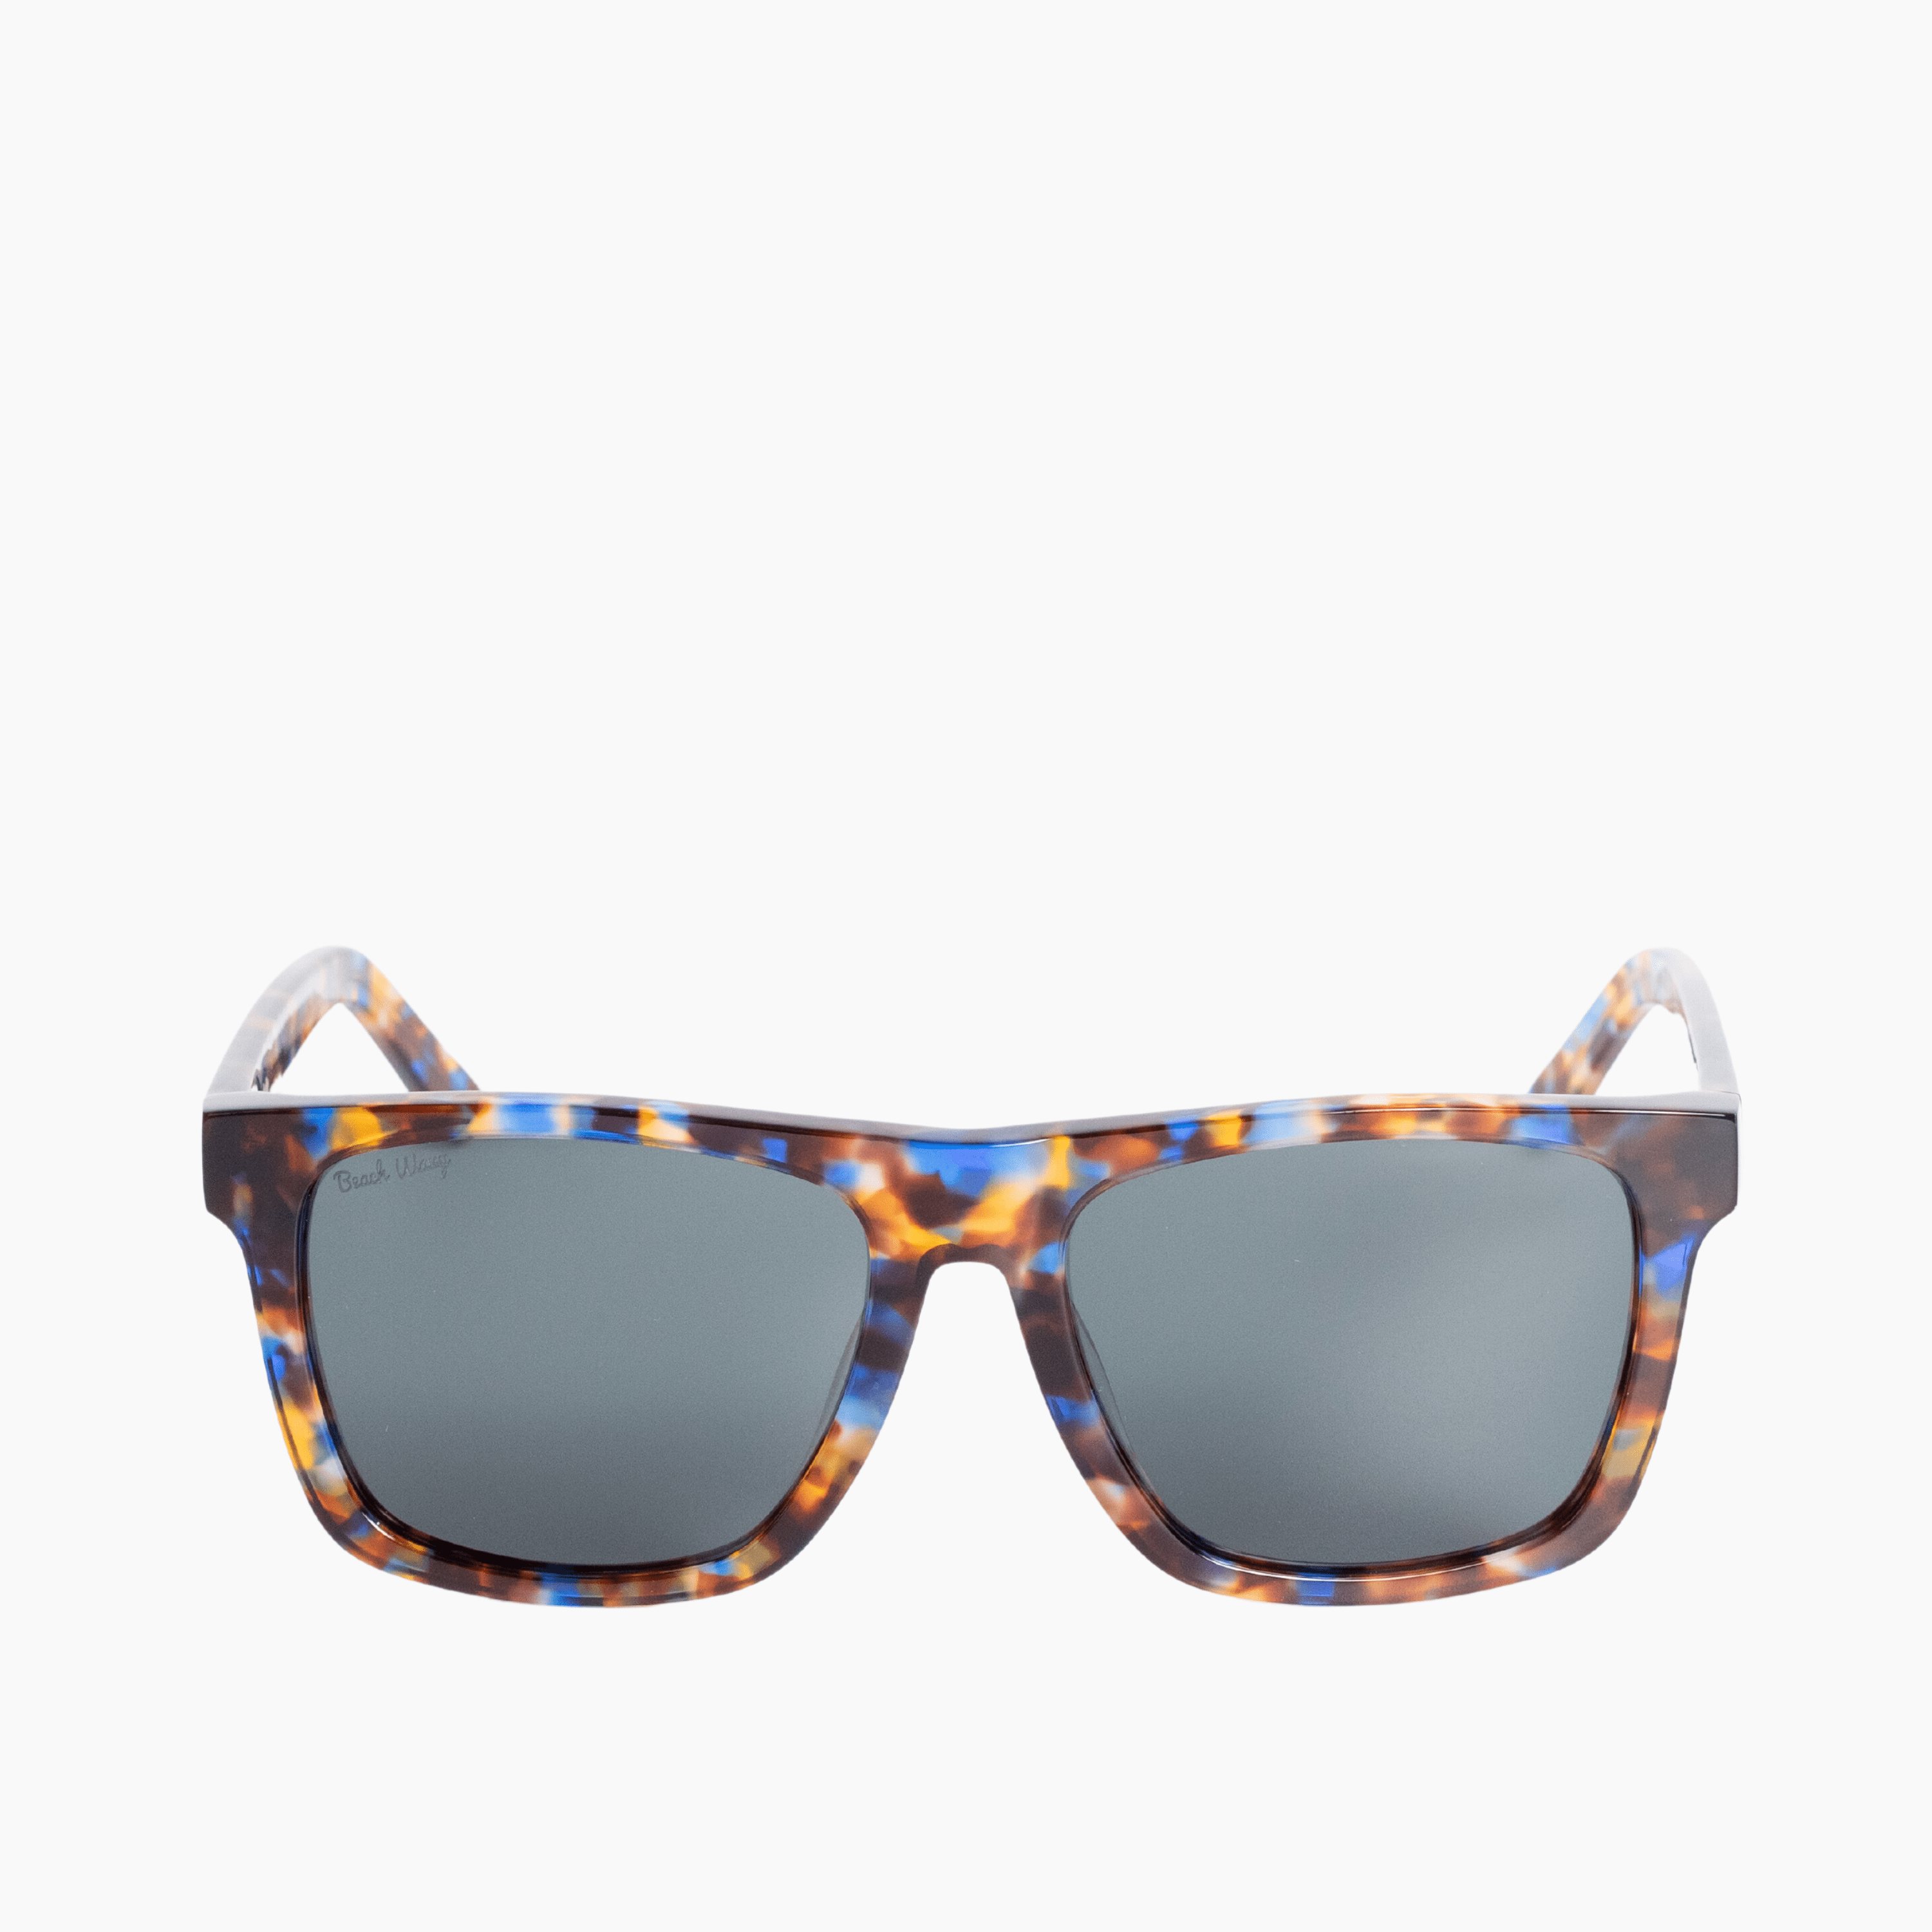 BEACH WAVY Sunglasses Tortoise / Oversized / Polarized Cat.3 BEACH WAVY - AALTO